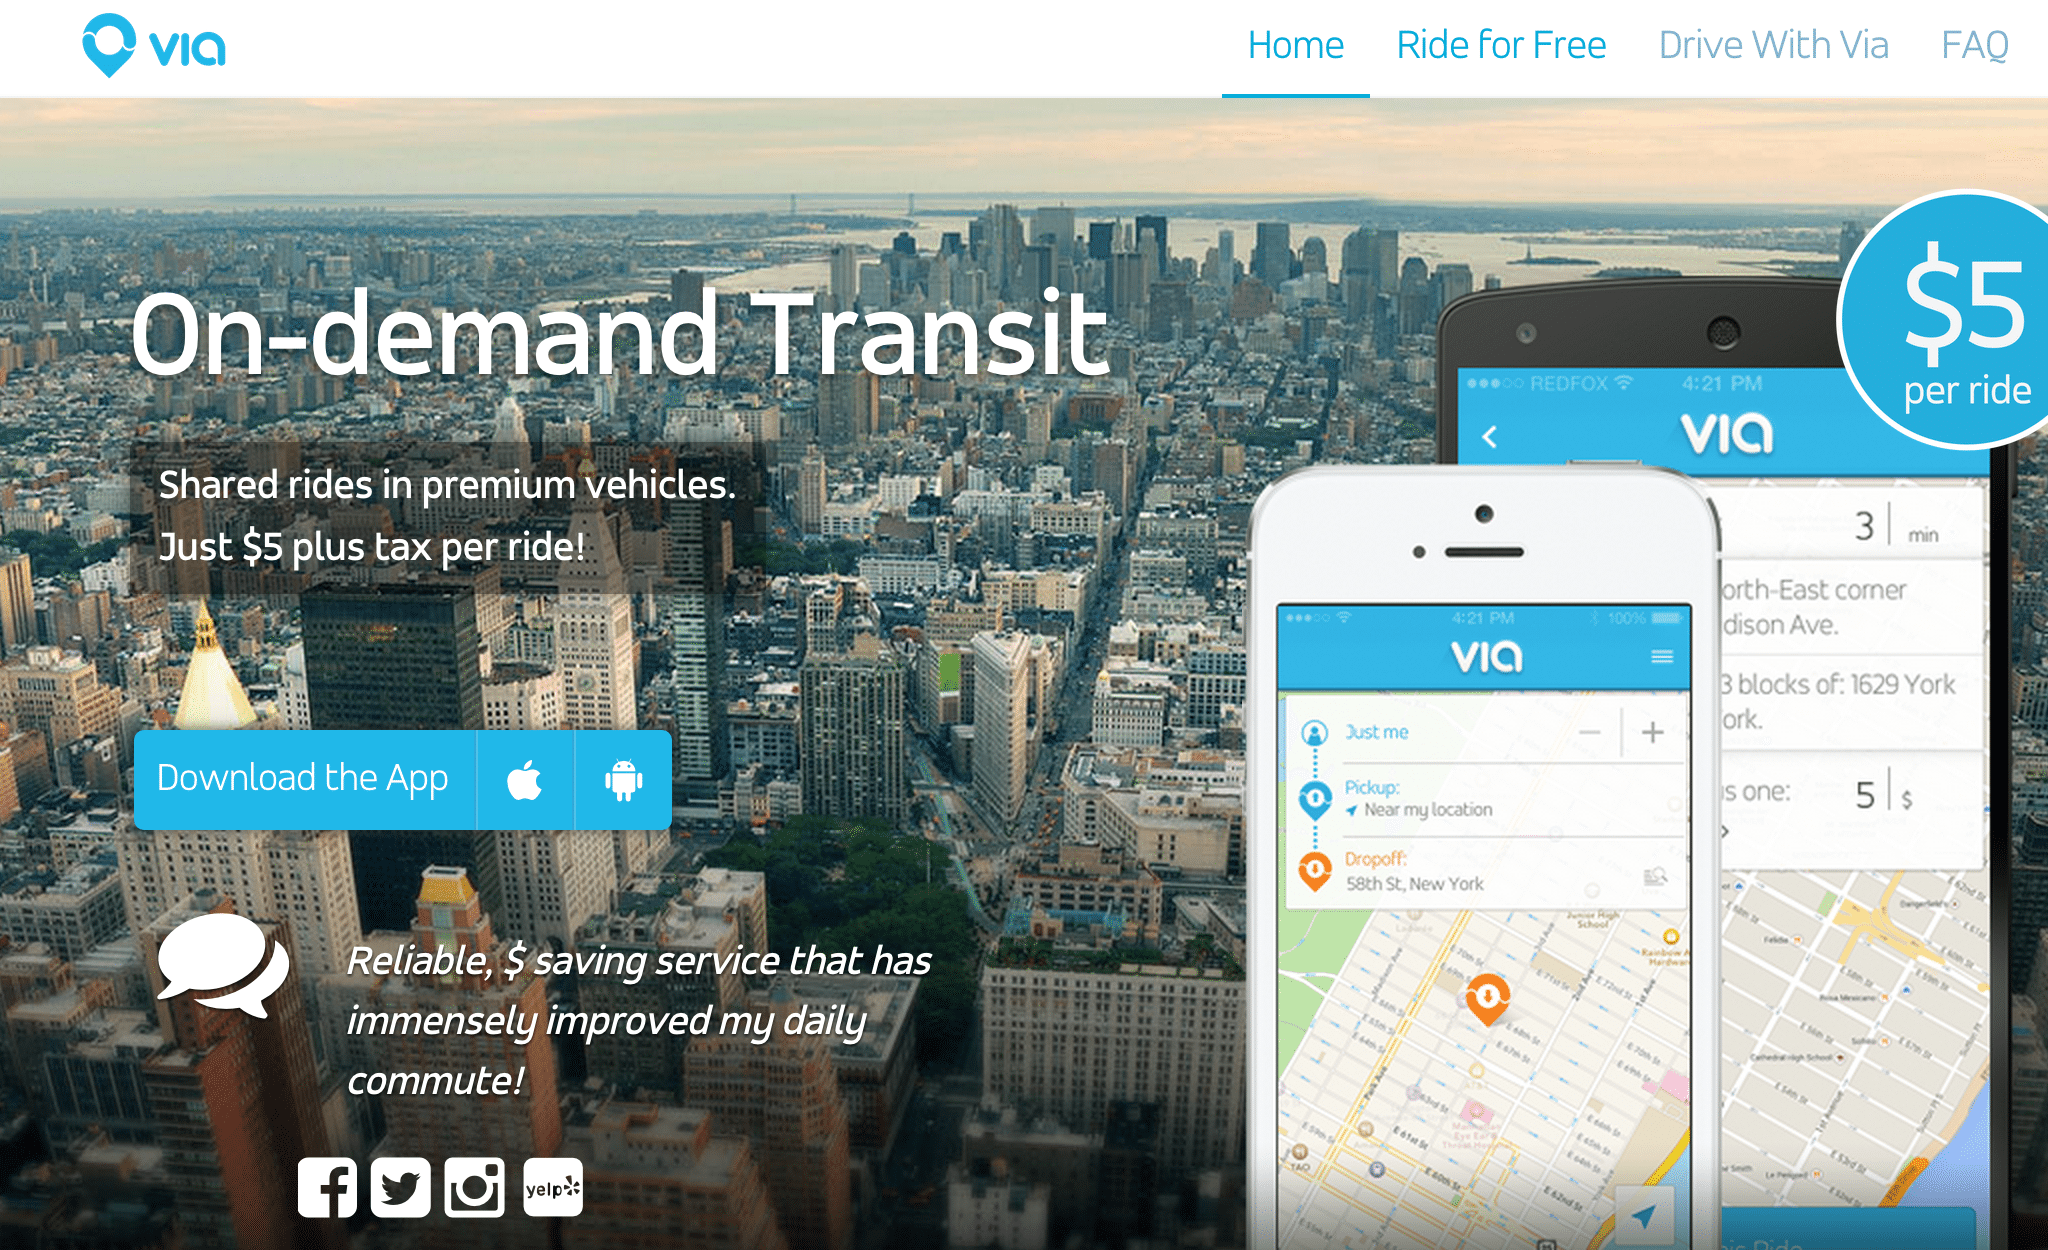 Via is an on-demand ride-share app using luxury SUV vehicles. 